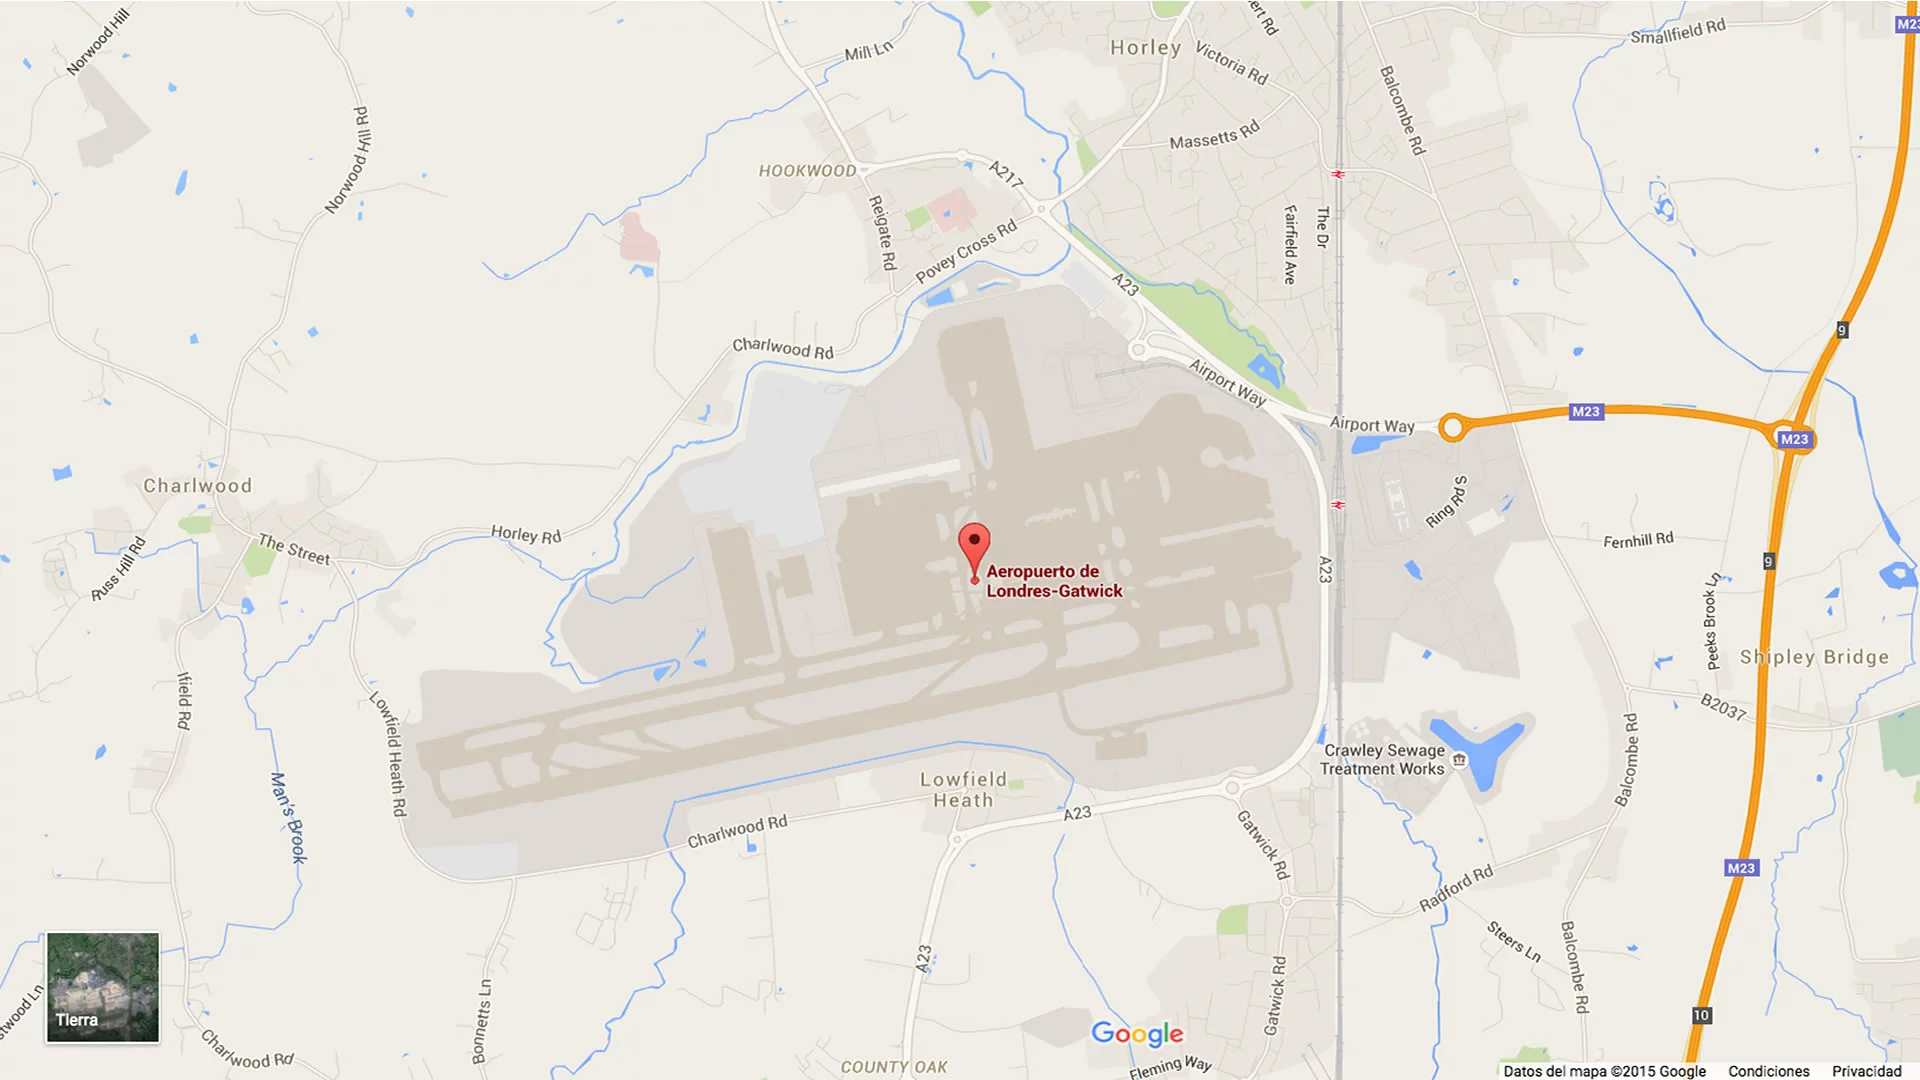 Mapa do aeroporto de Londres Gatwick